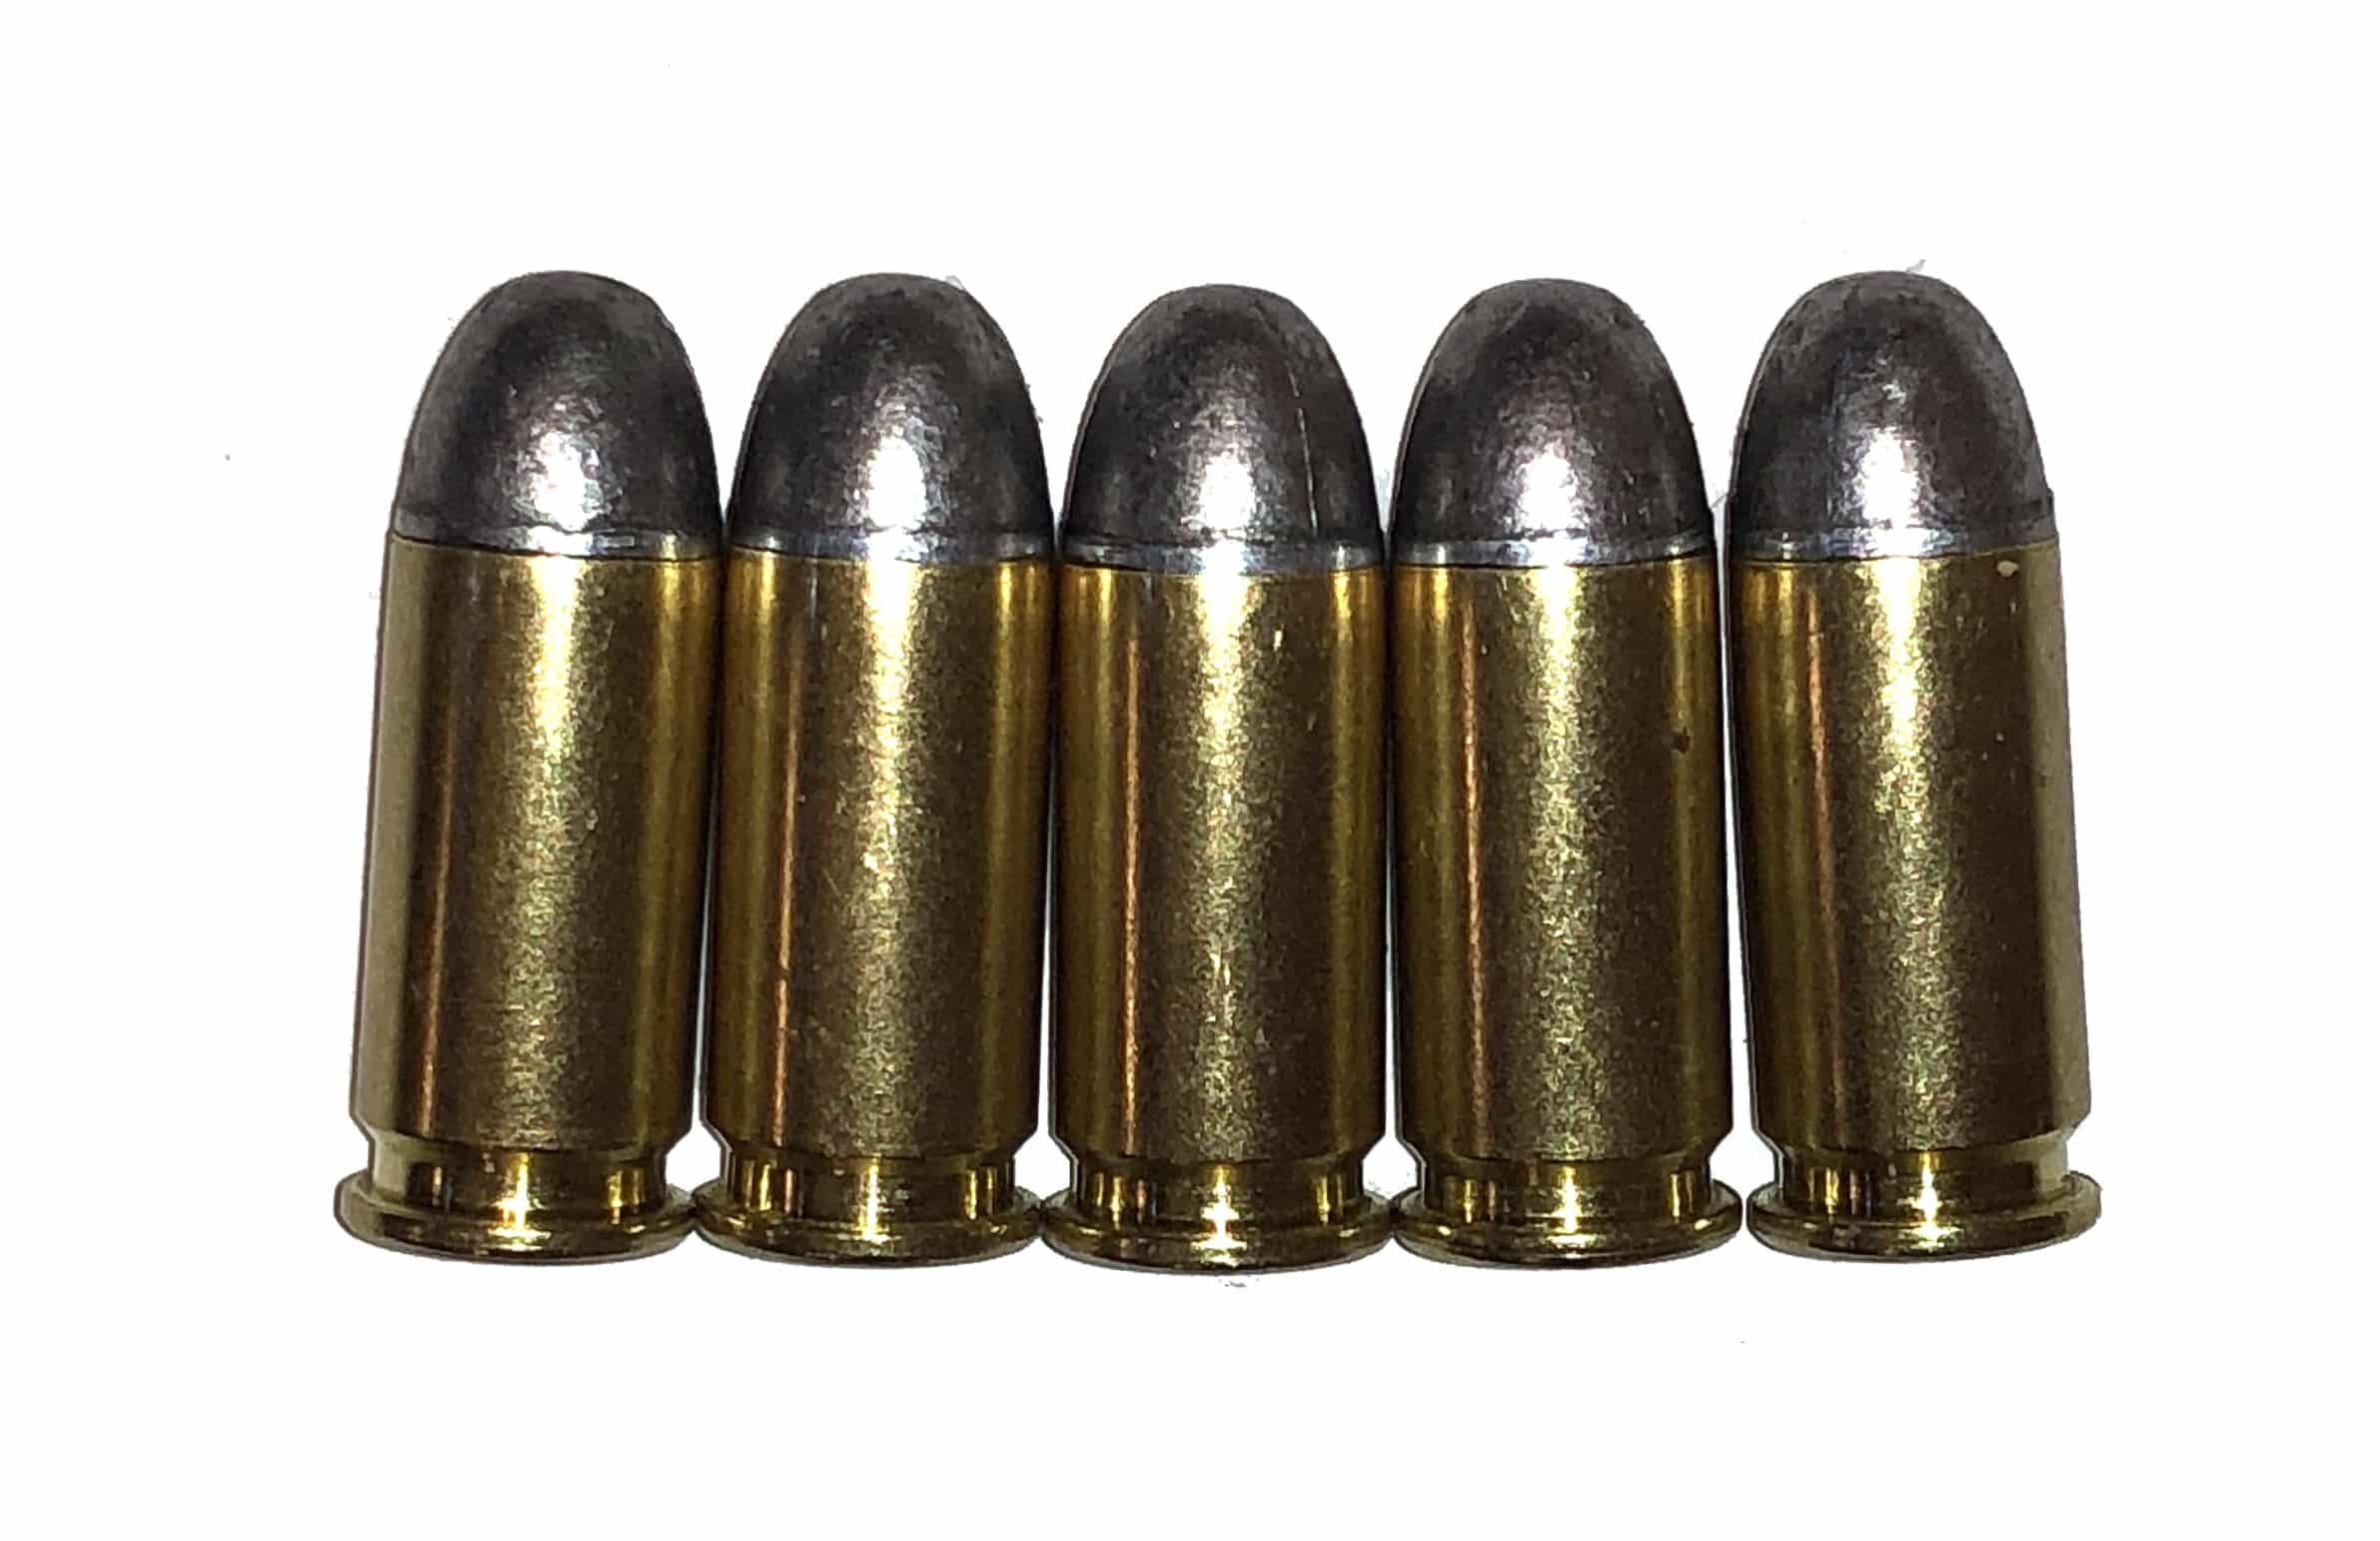 9x20 Browning Long Dummy Rounds Cartridges Snap Caps Fake Bullets J&M Spec INERT